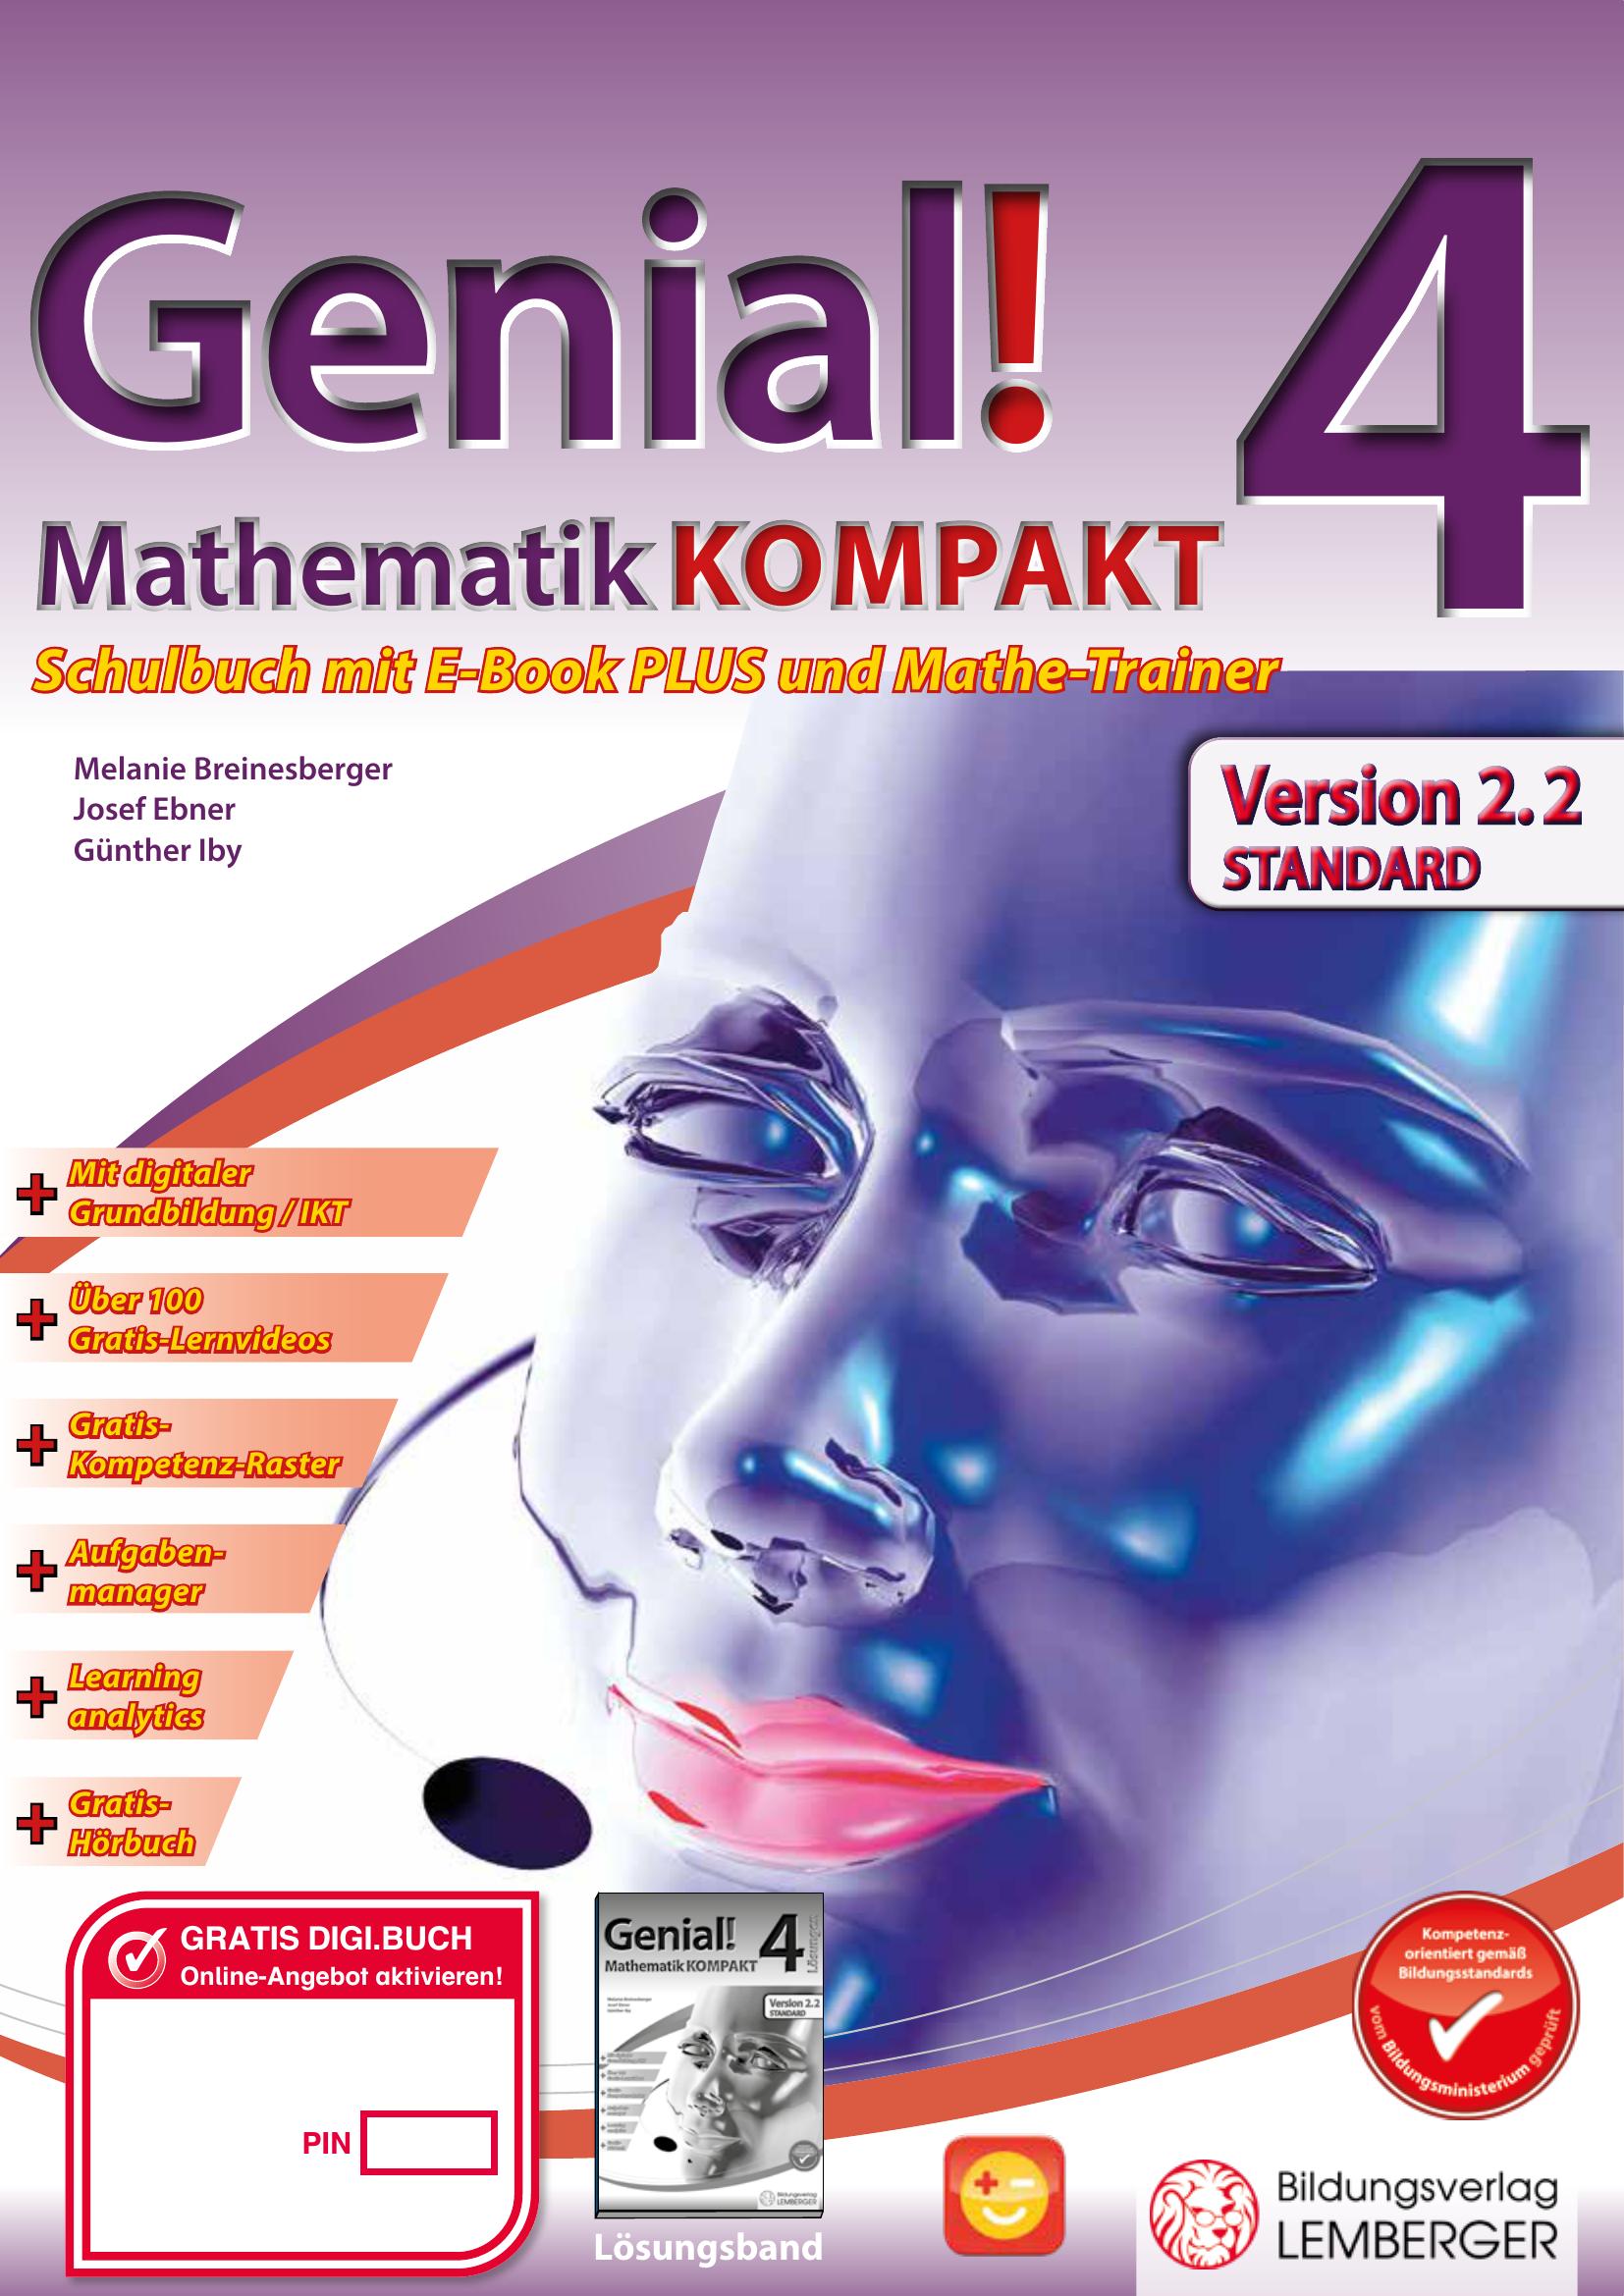 Genial! Mathematik Kompakt 4 IKT v2.2